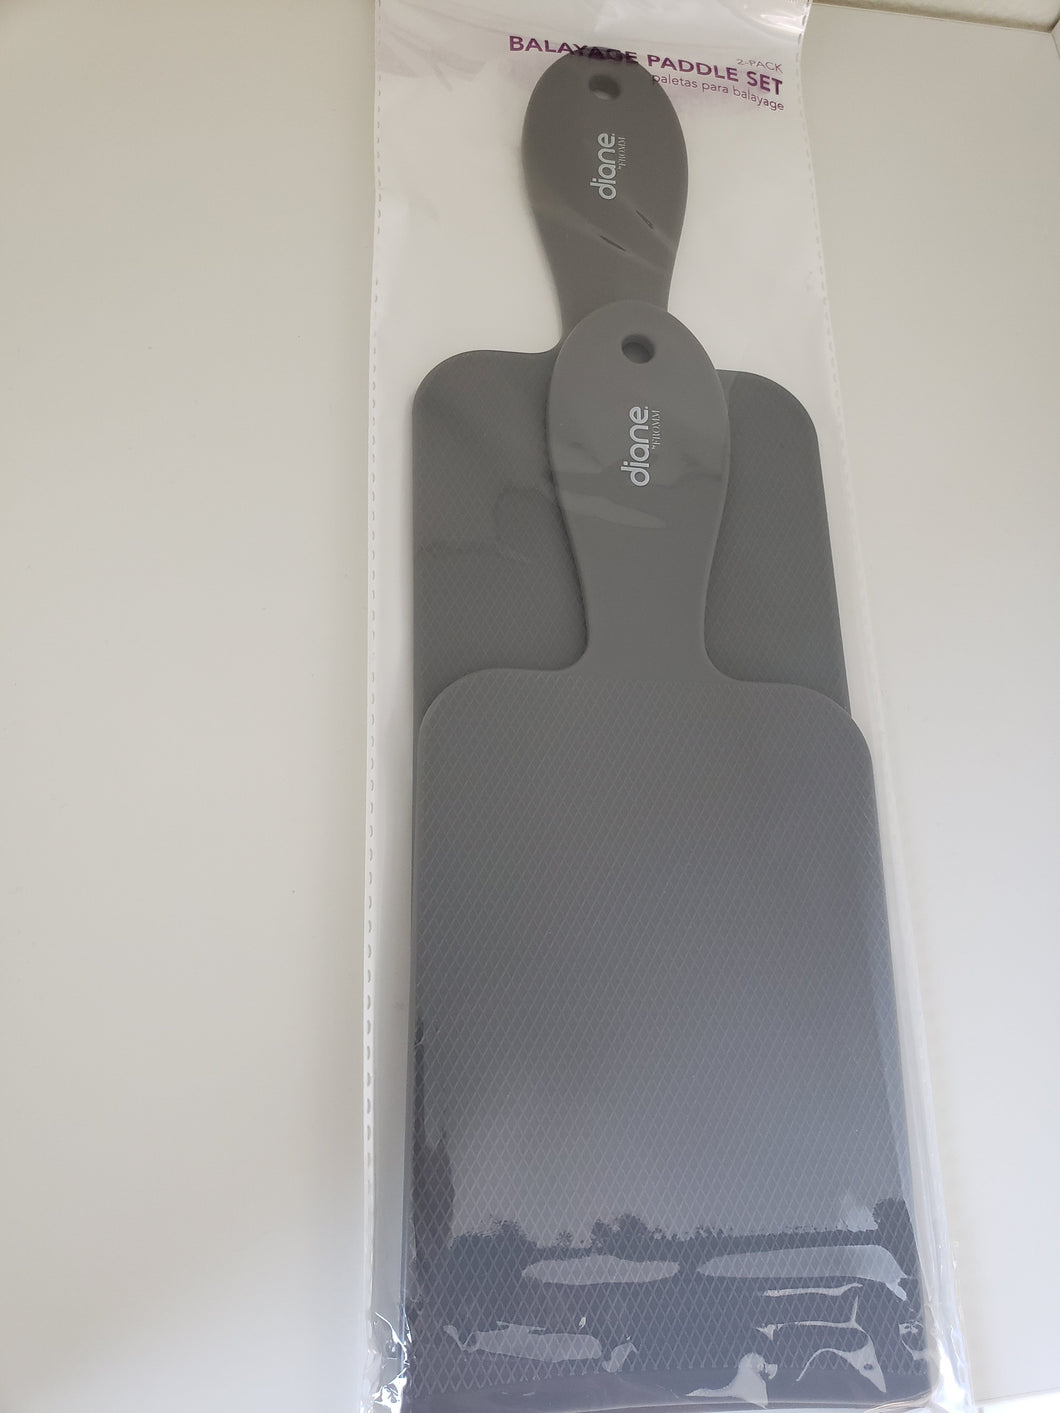 Balayage Paddle Grey